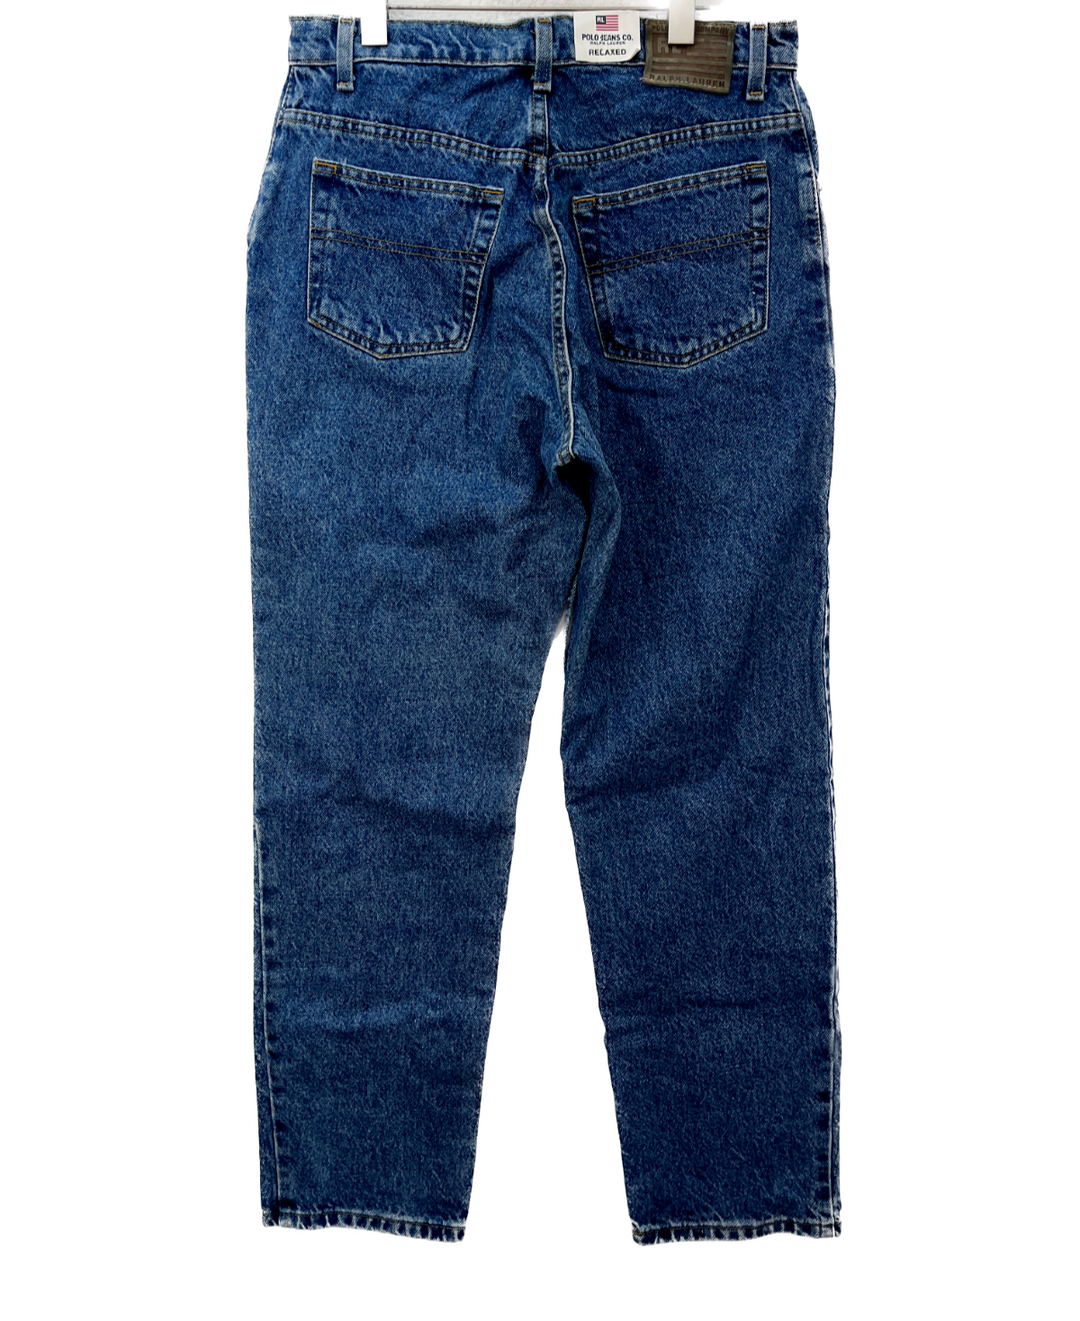 Polo Ralph Lauren Jeans Relaxed Blue Denim Jeans Size 12 x 29